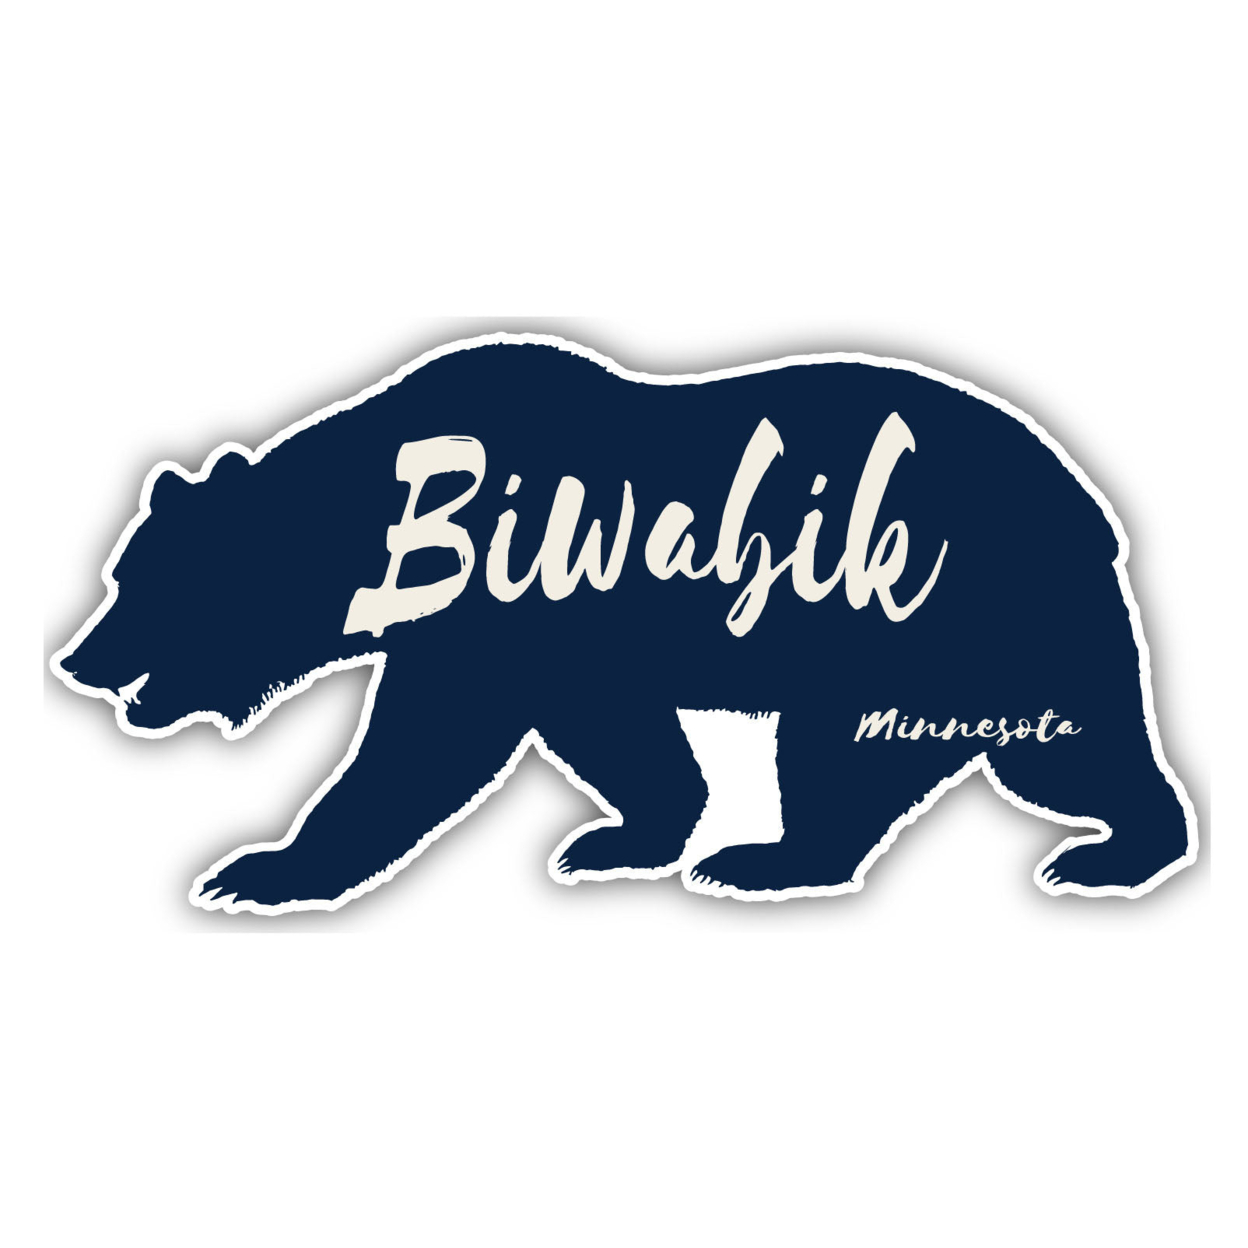 Biwabik Minnesota Souvenir Decorative Stickers (Choose Theme And Size) - 4-Pack, 8-Inch, Adventures Awaits